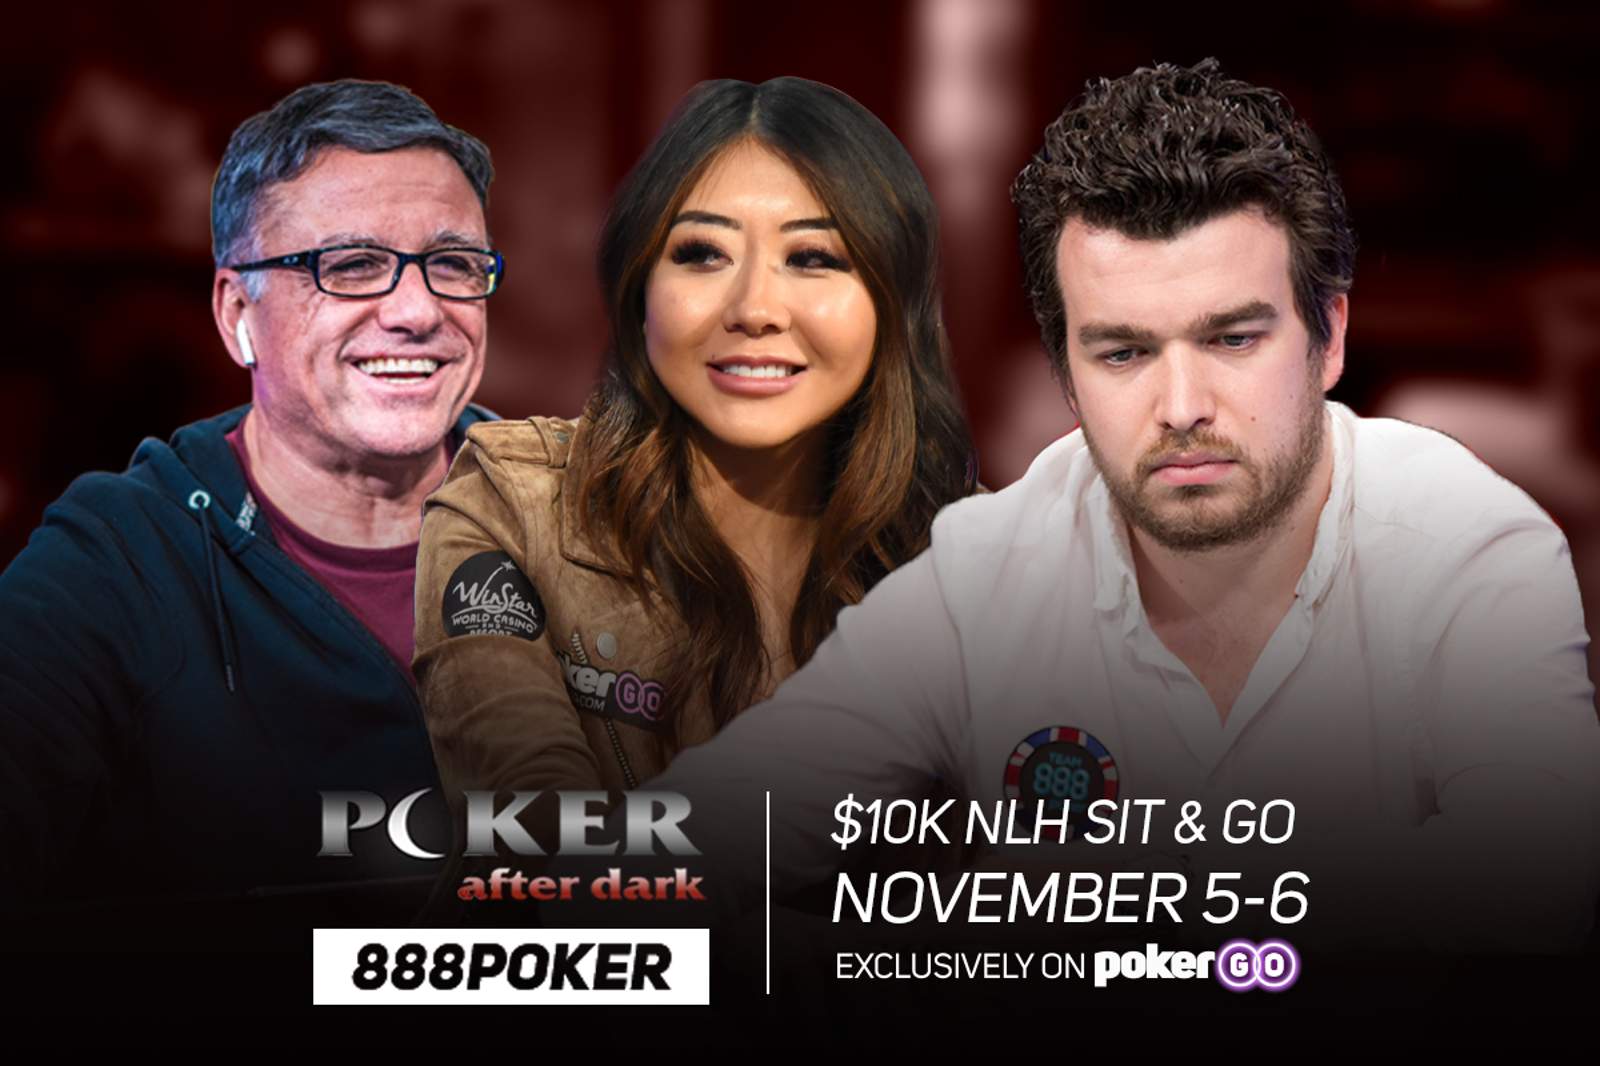 "888poker" Week on "Poker After Dark" Features Chris Moorman, Online Qualifiers